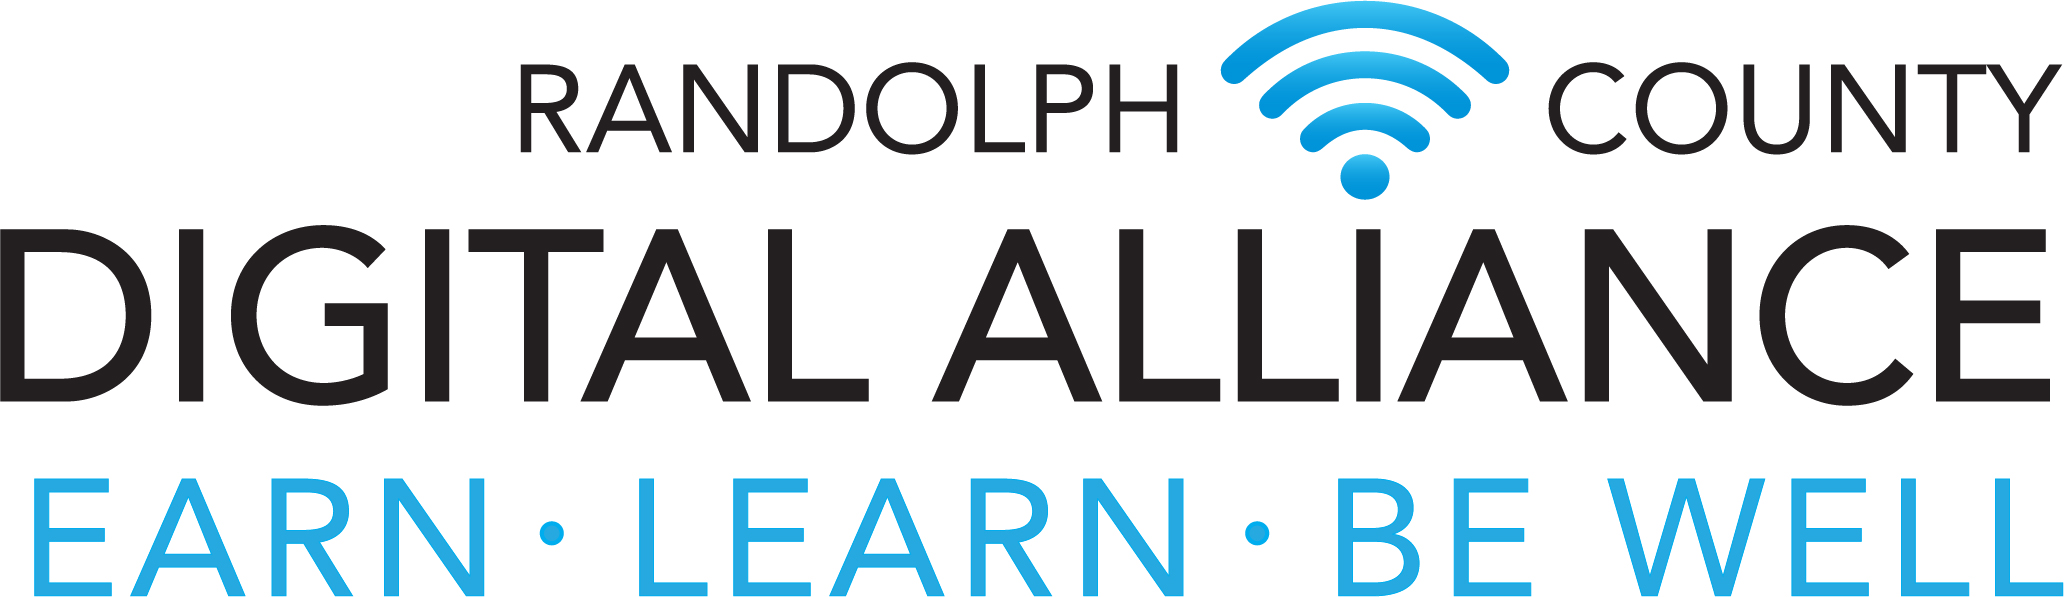 Digital Alliance logo image